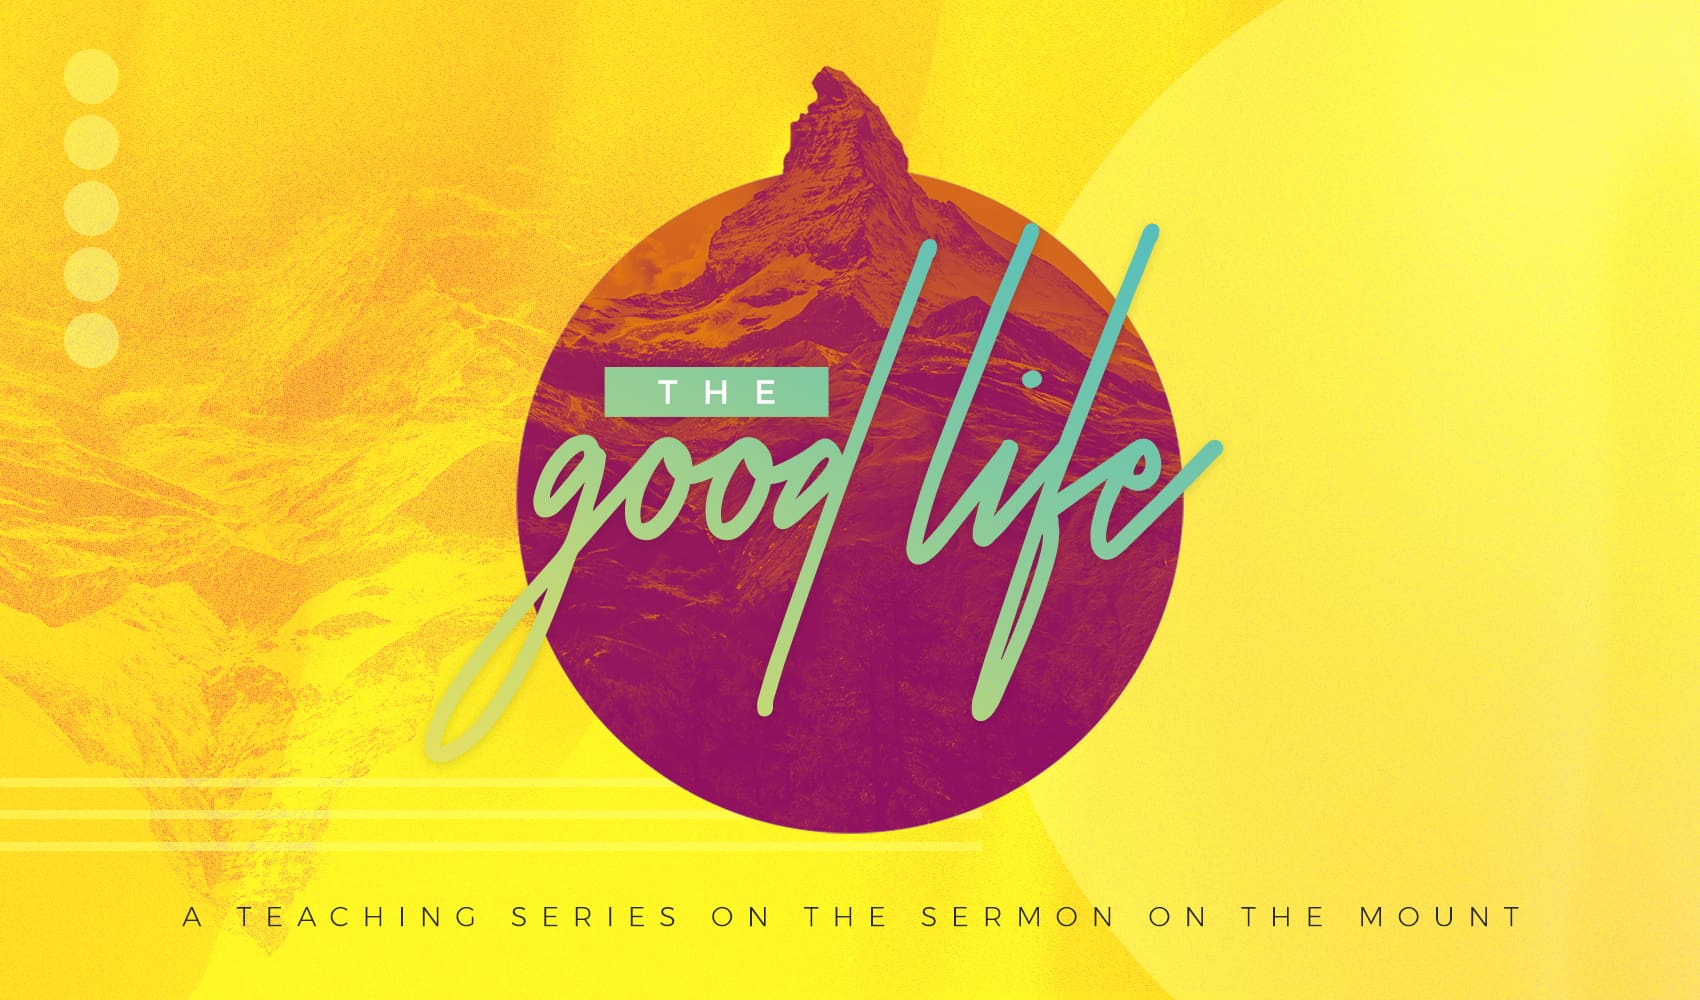 The Good Life and Money (Matthew 6:19-34)